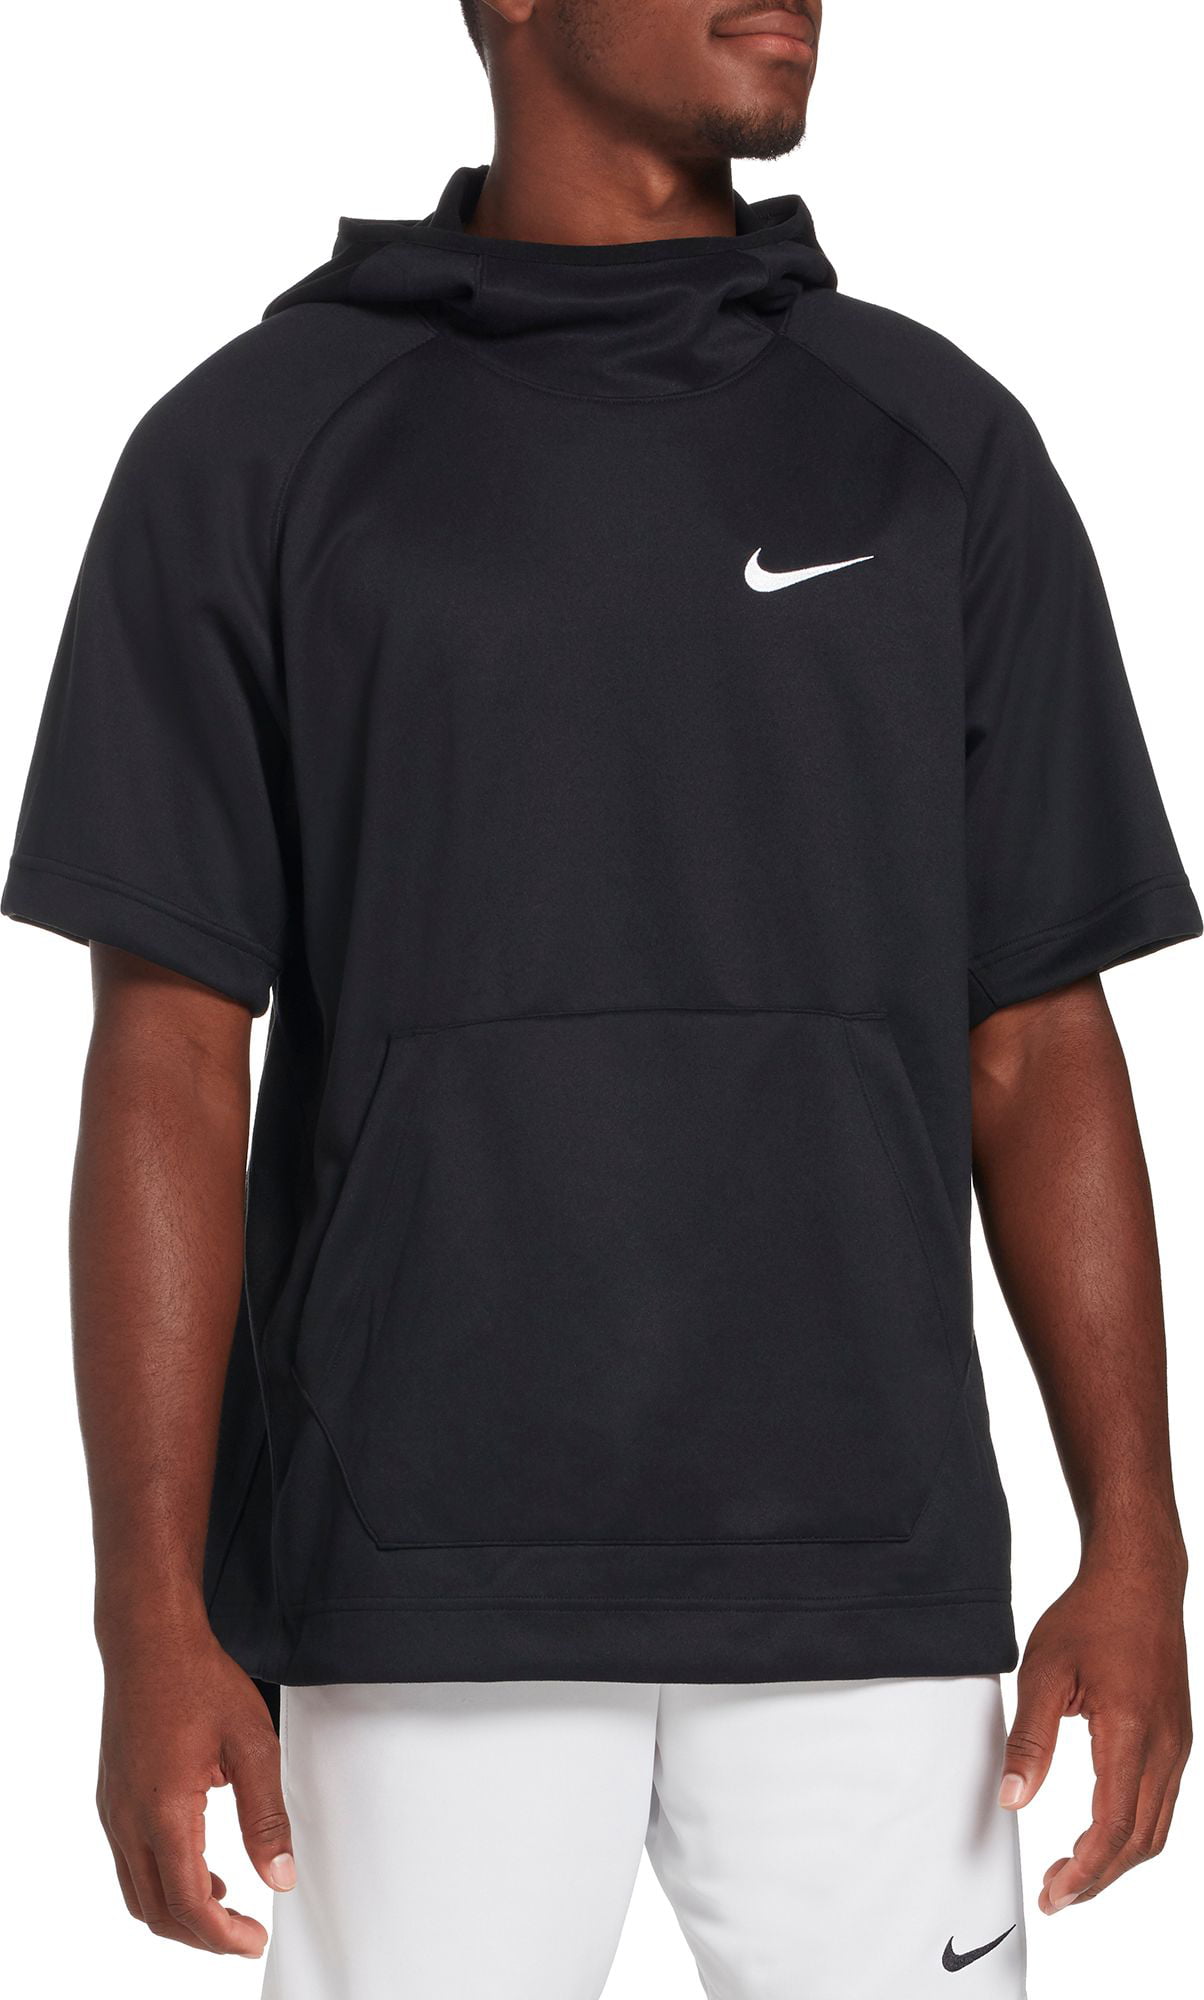 Nike - Nike Men's Dri-FIT Spotlight Short Sleeve Hoodie - Walmart.com ...